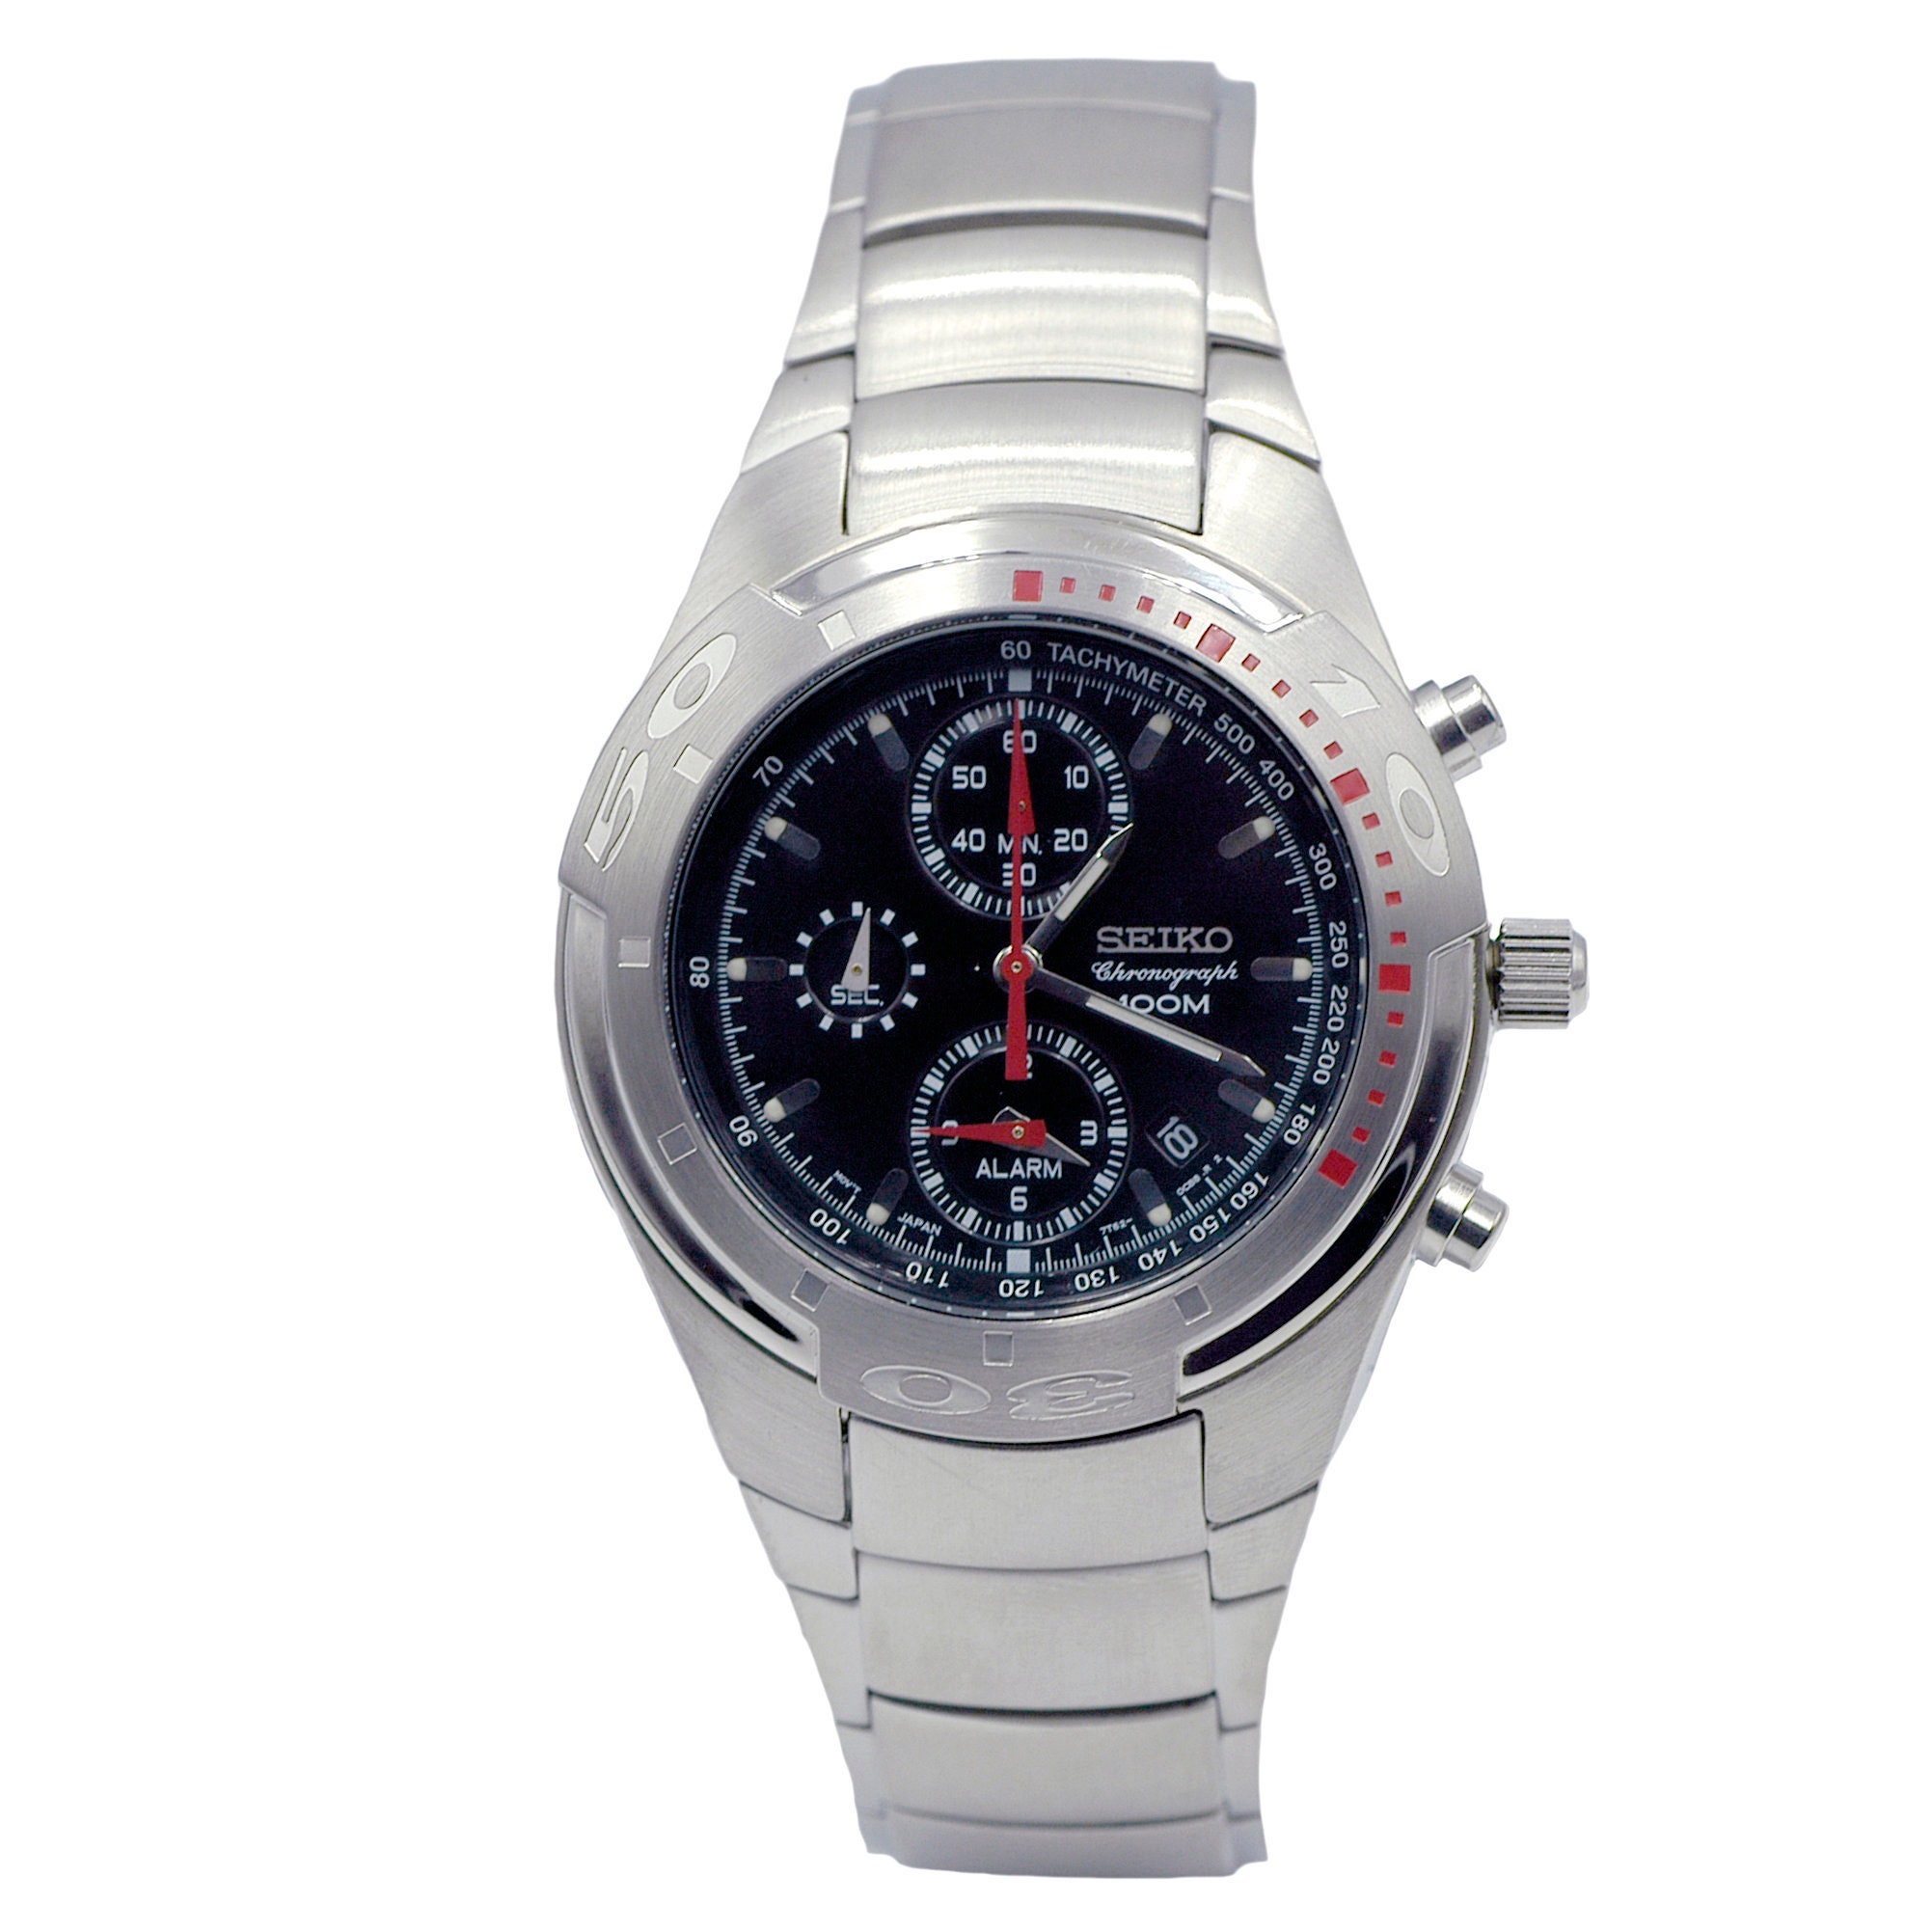 Seiko Alarm Chronograph Men's Stainless Steel Watch SNA165 - Etsy